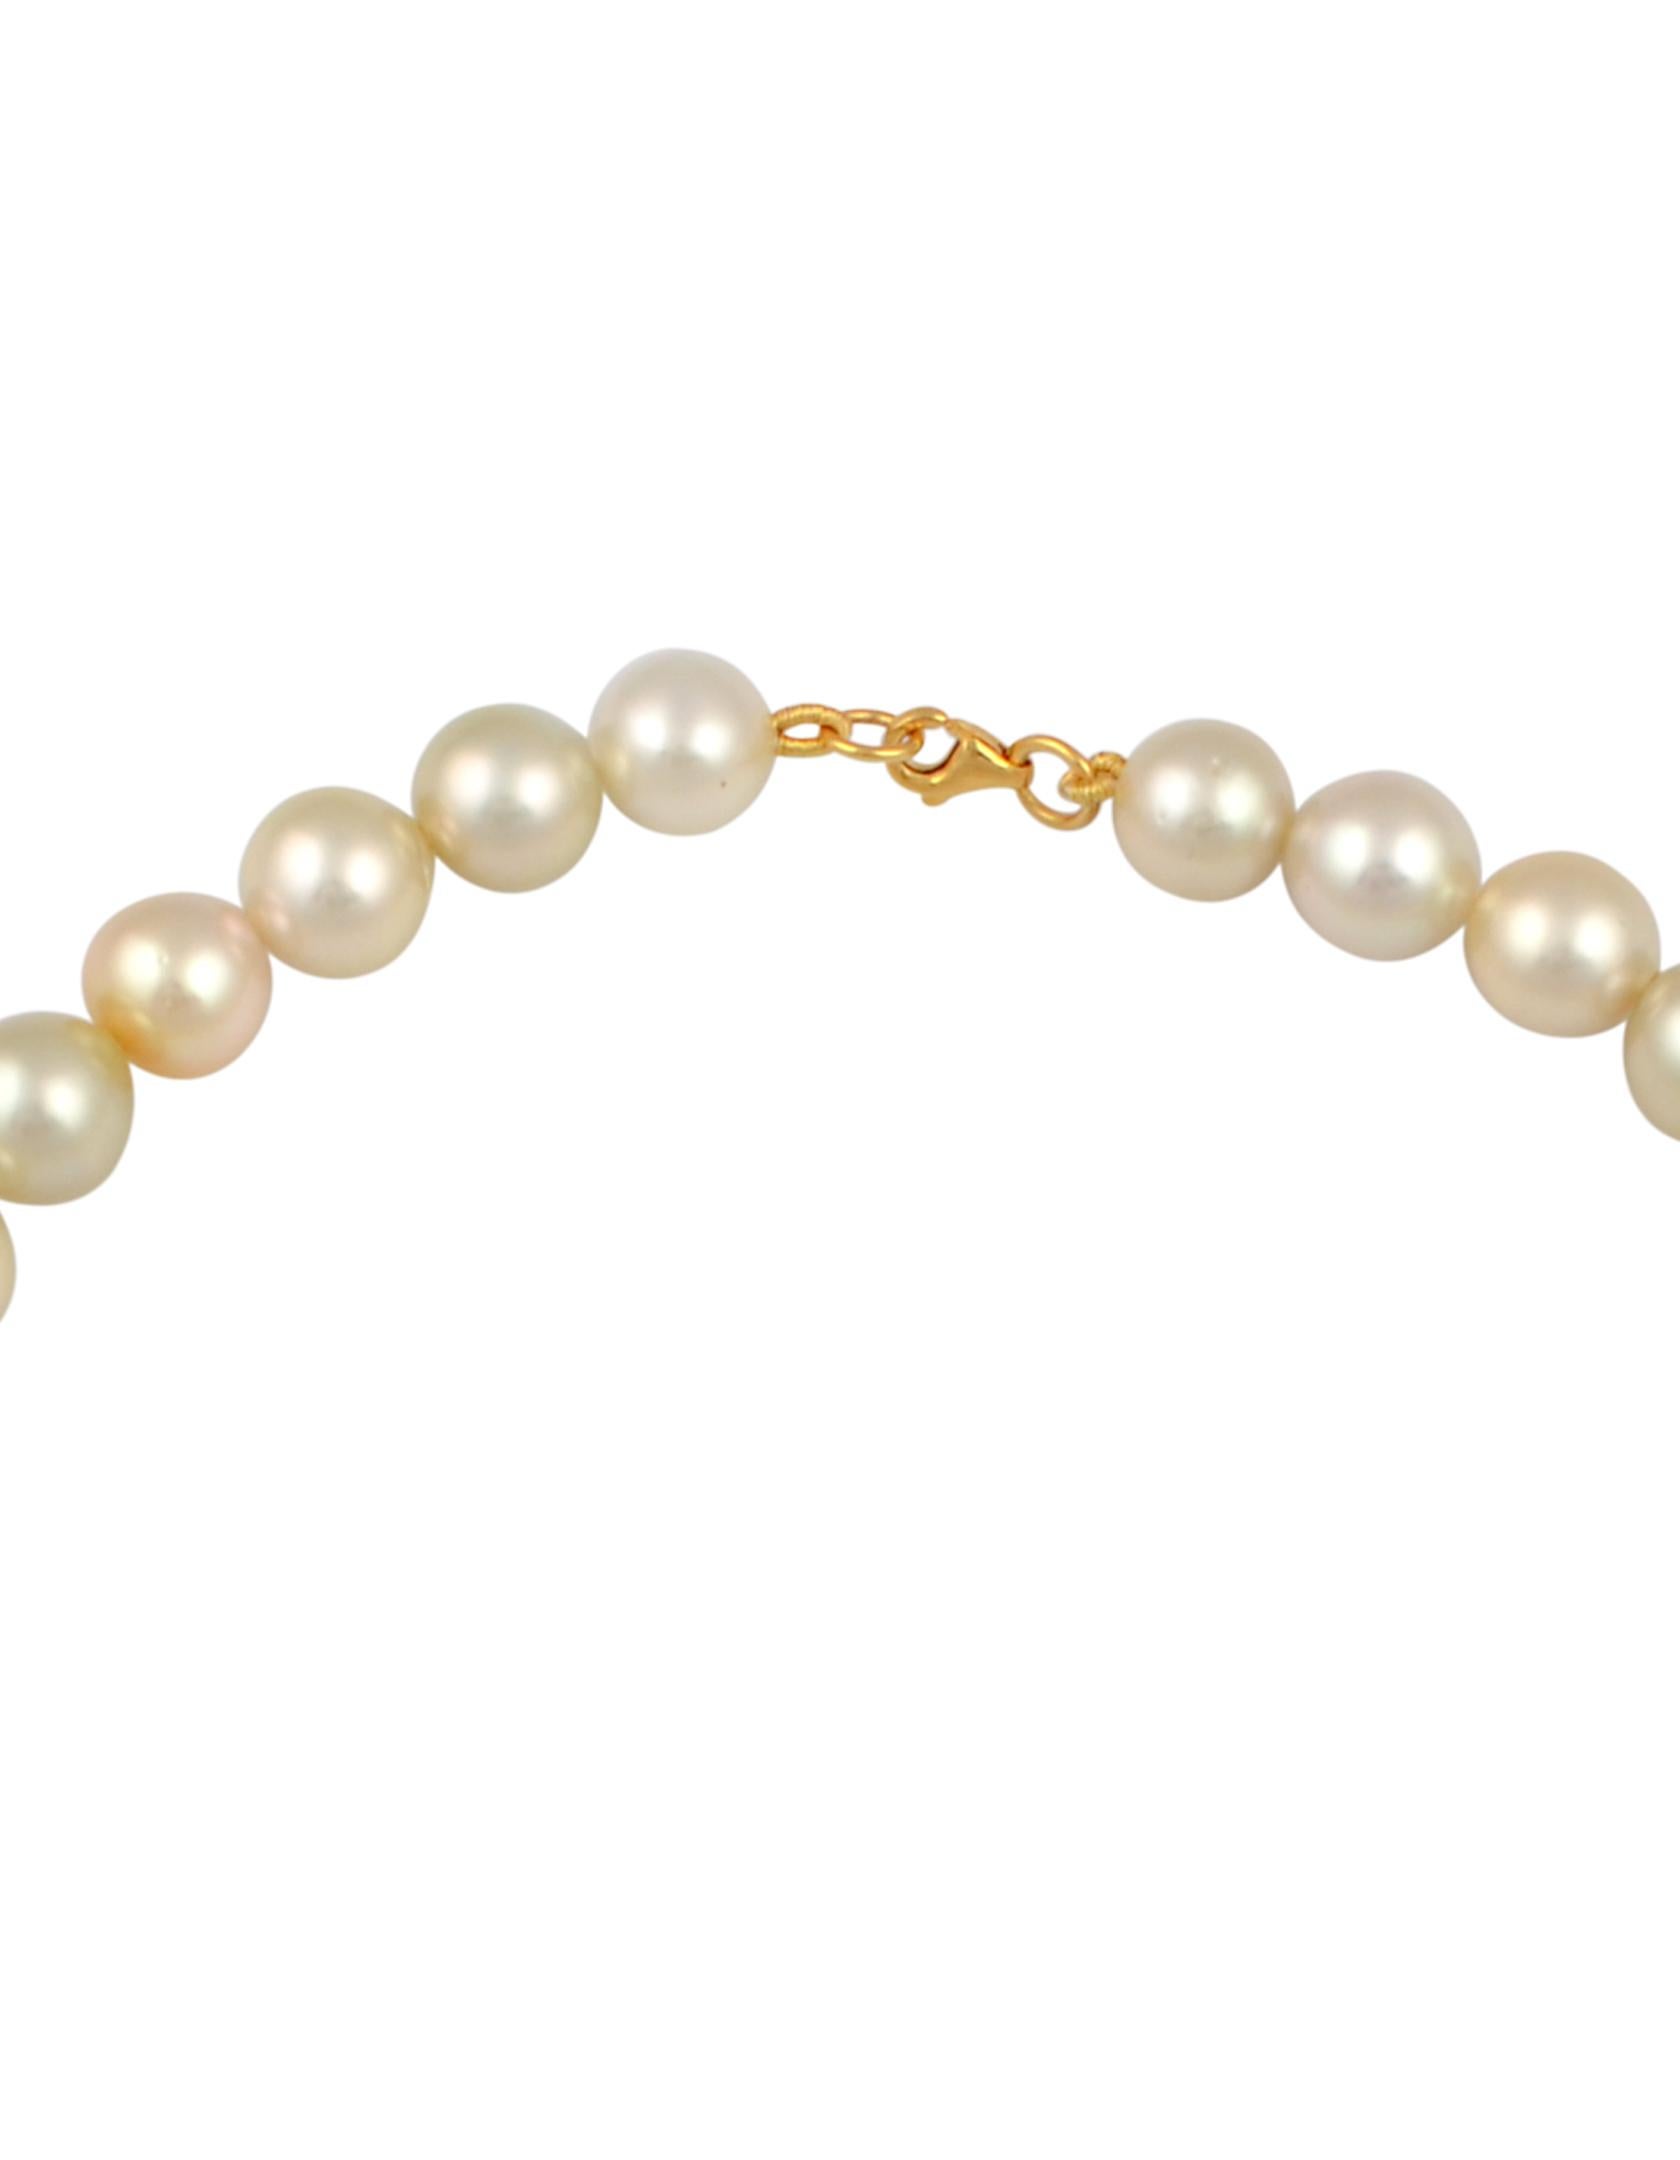 cream color pearl necklace